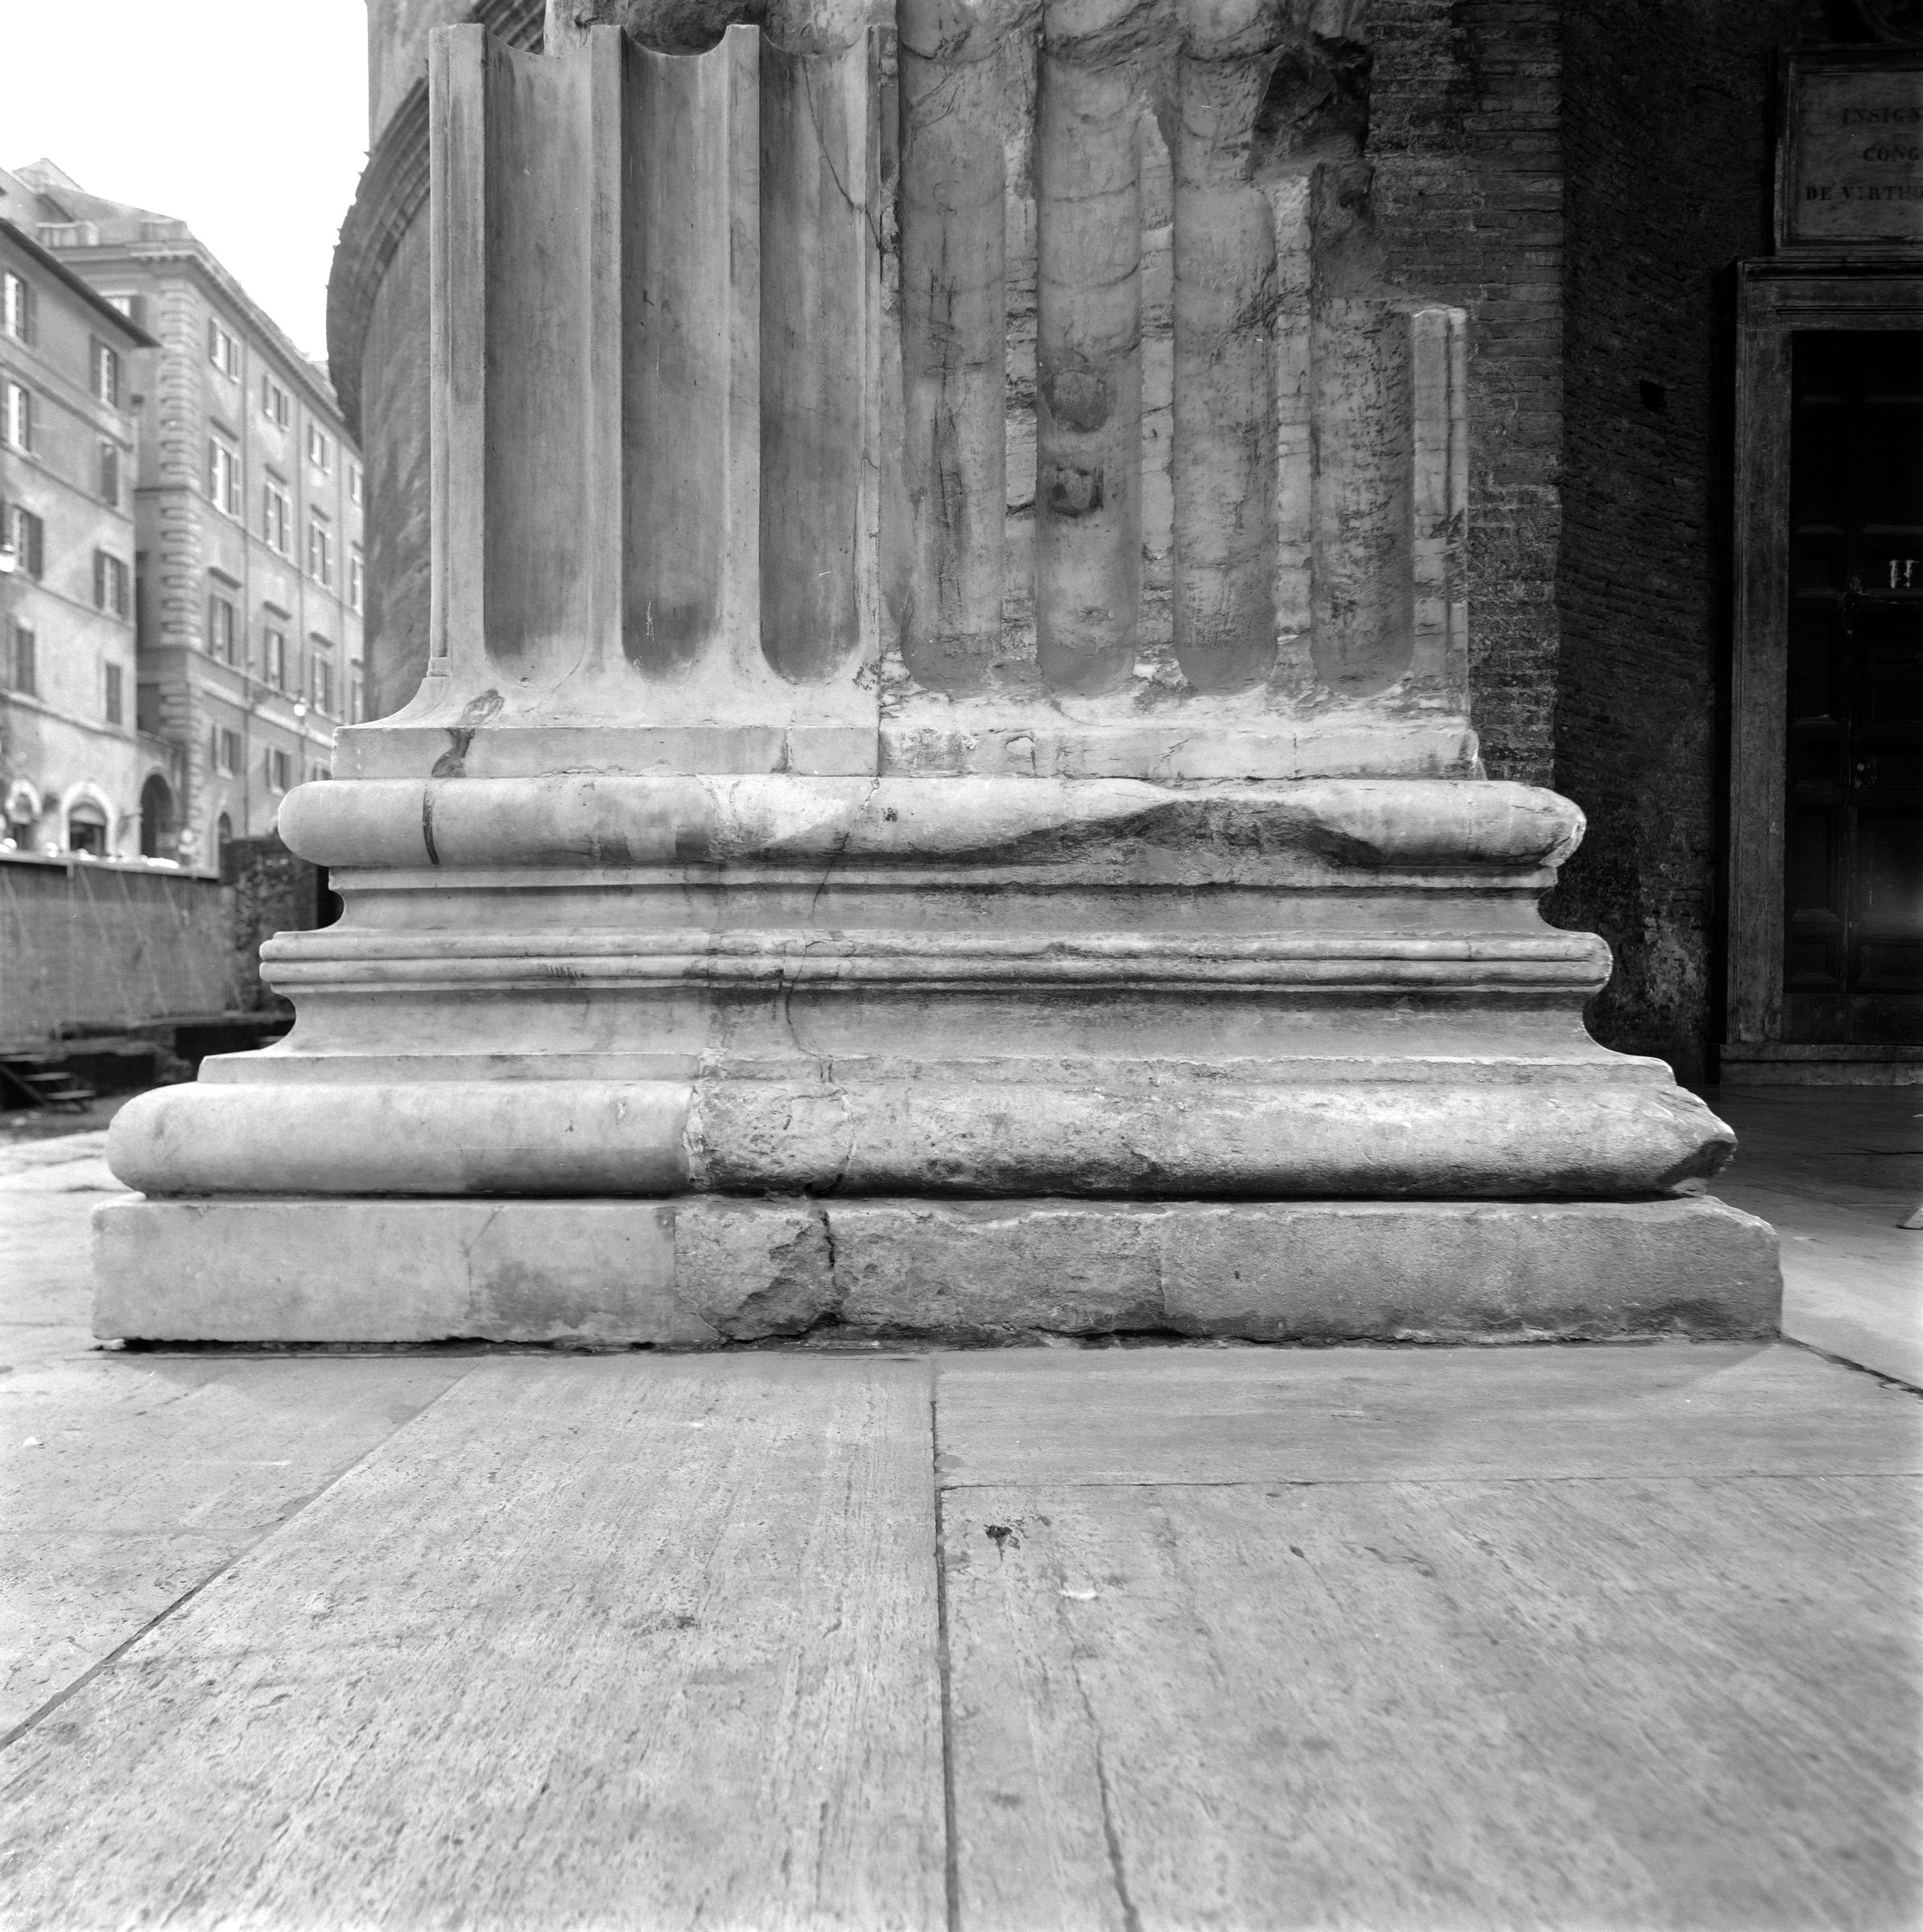 Fotografo non identificato, Pantheon,1951-2000, gelatina ai sali d'argento, 6x6 cm, N077989